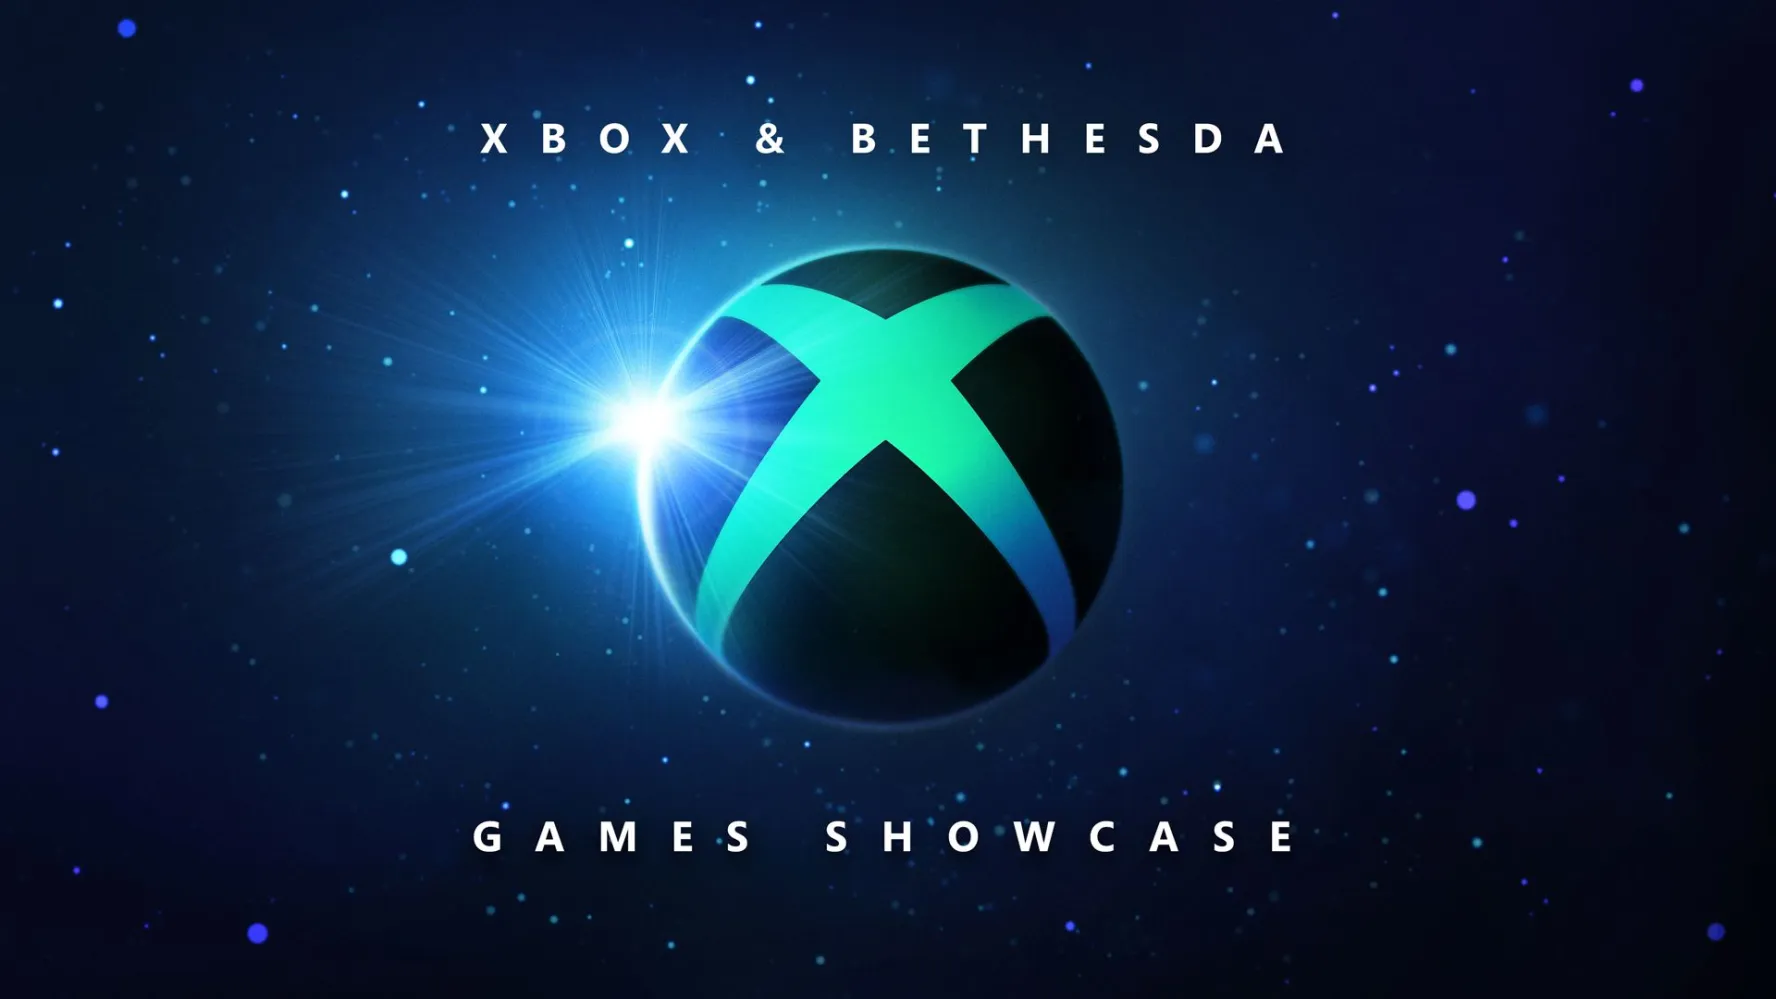 Xbox-今年將再度攜手-Bethesda-透過-Xbox-Bethesda-Games-Showcase-全球同步直播發表全新遊戲陣容